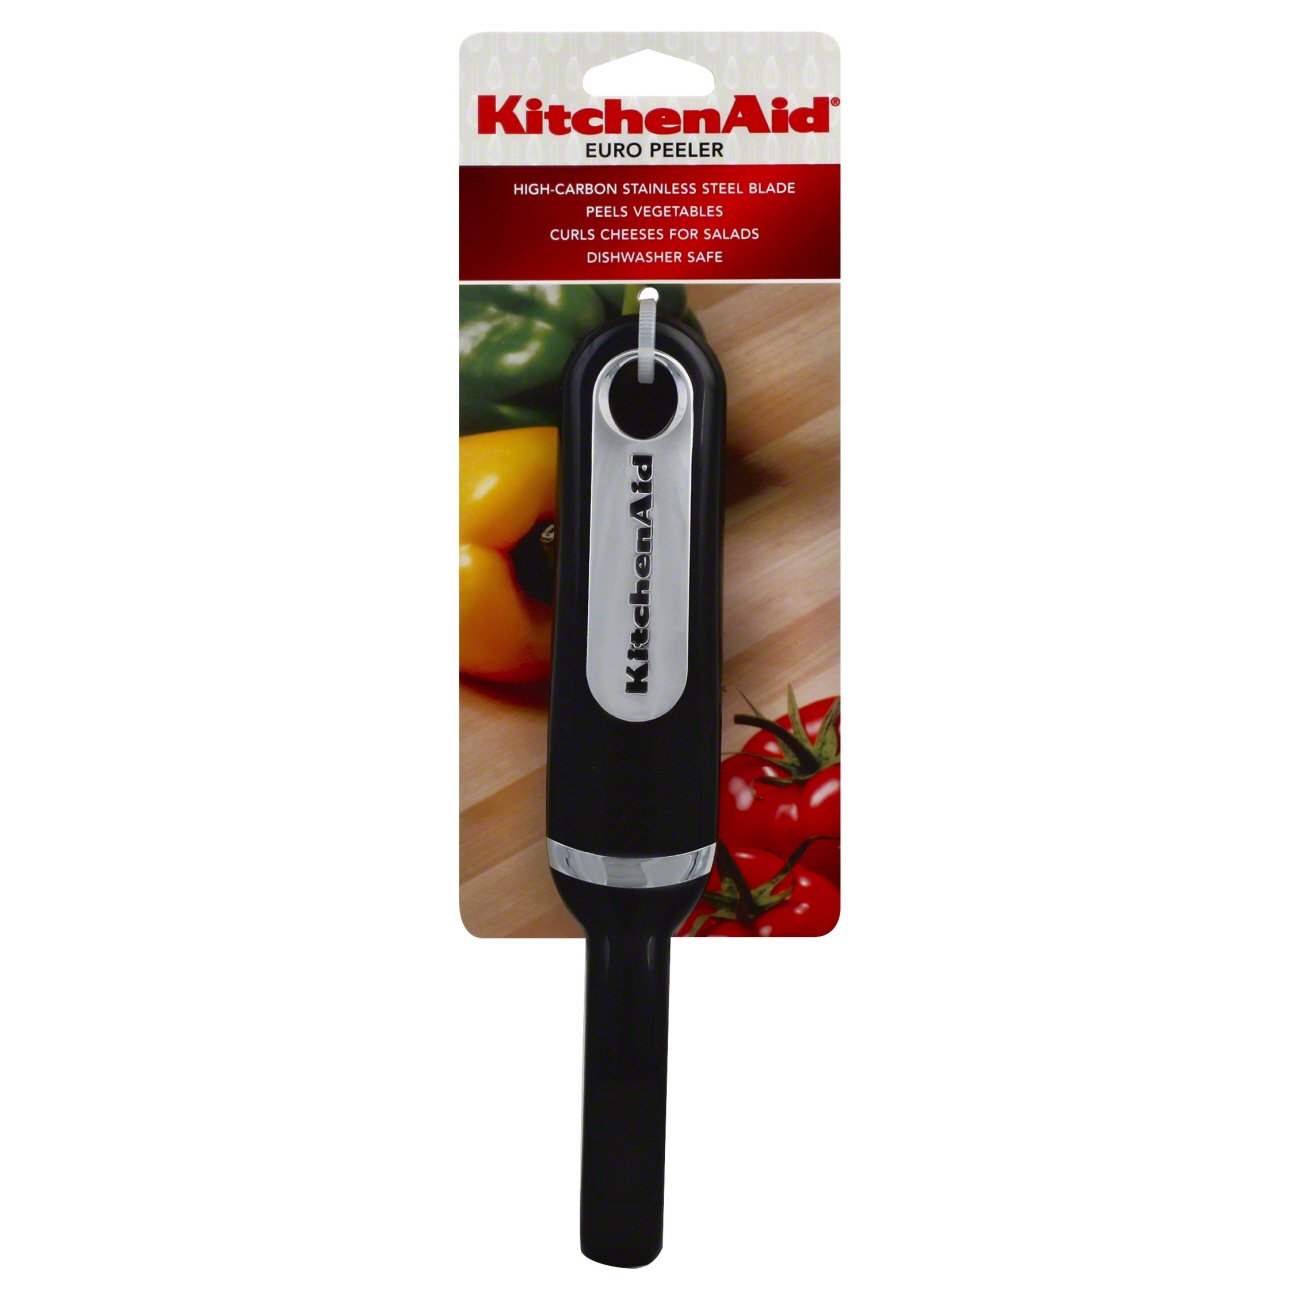 KitchenAid Black Euro Peeler - Shop Utensils & Gadgets at H-E-B